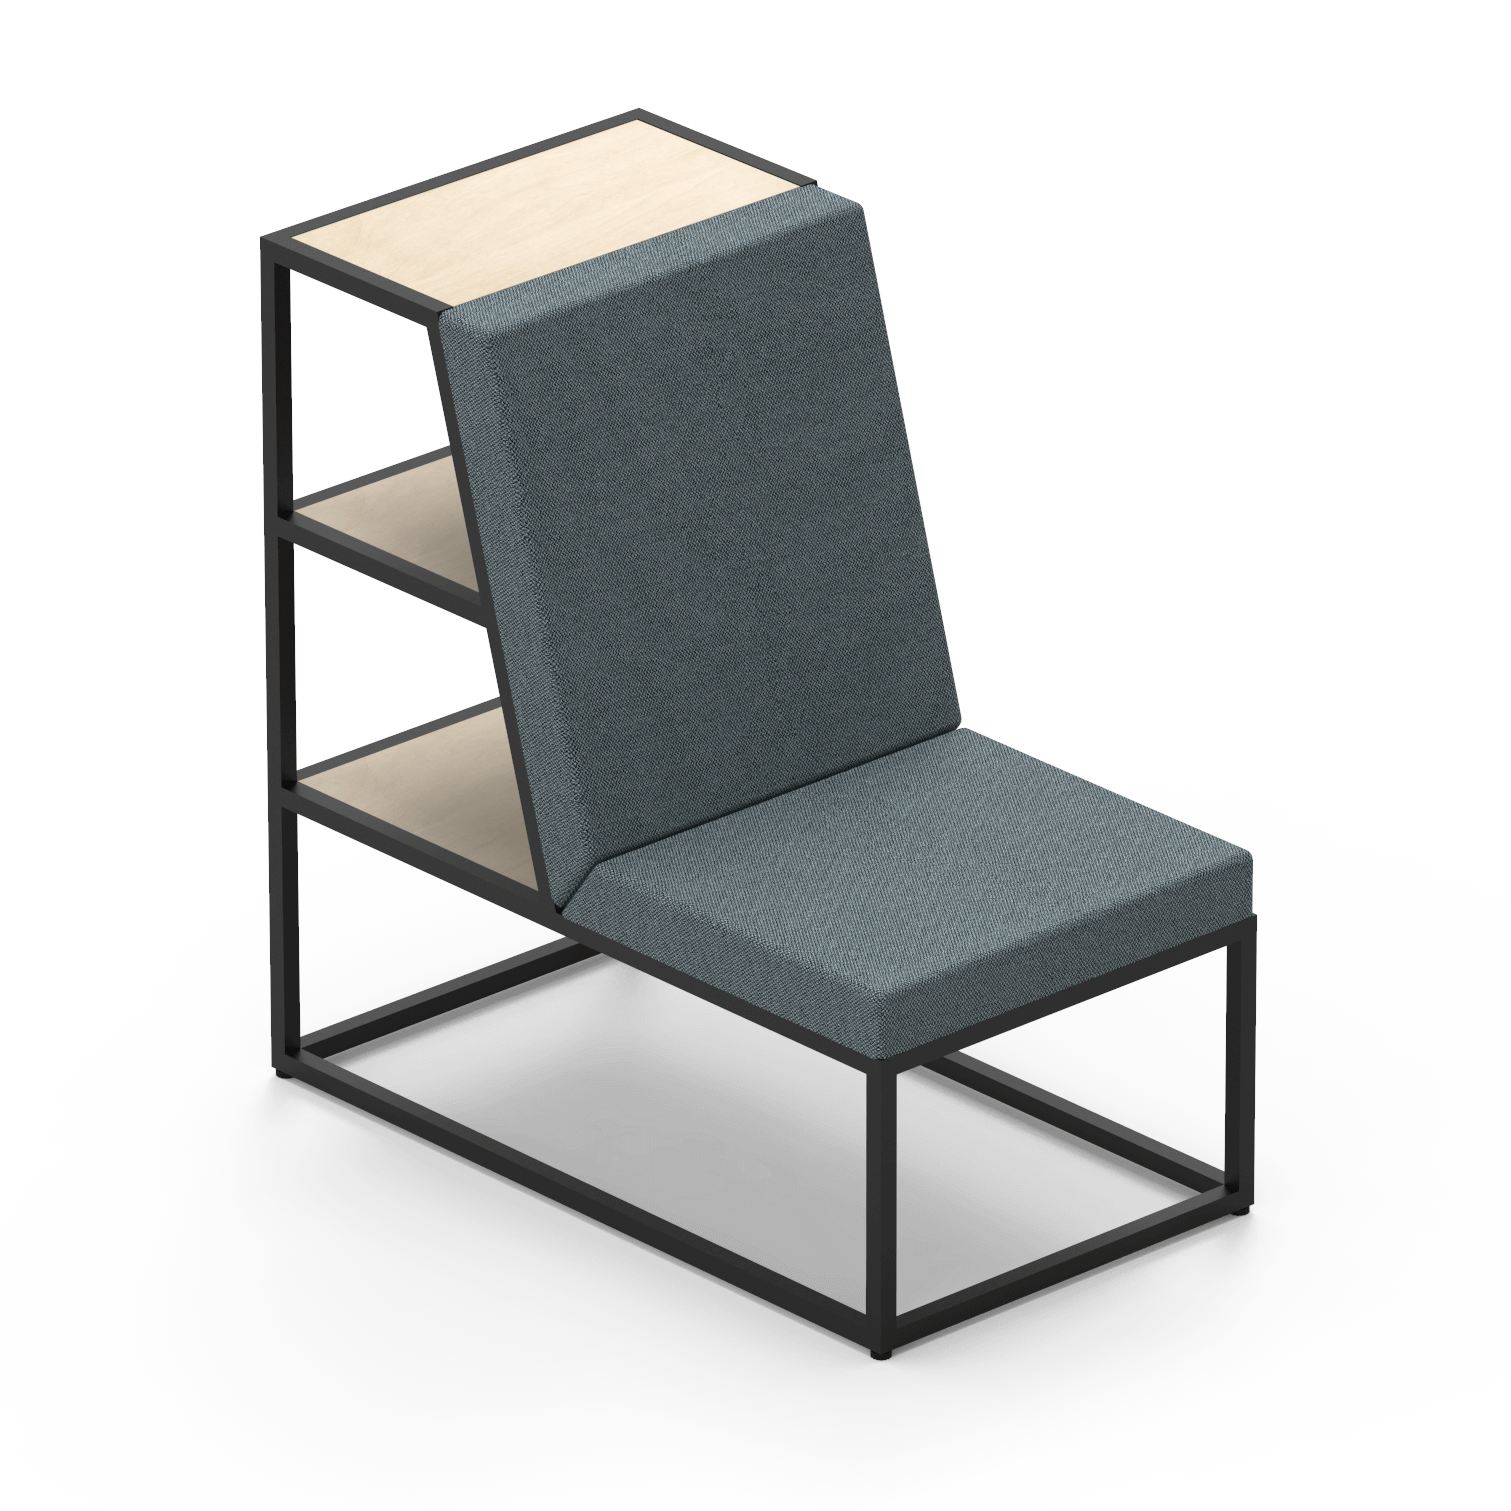 Workagile Anyway modular seat / shelf combination